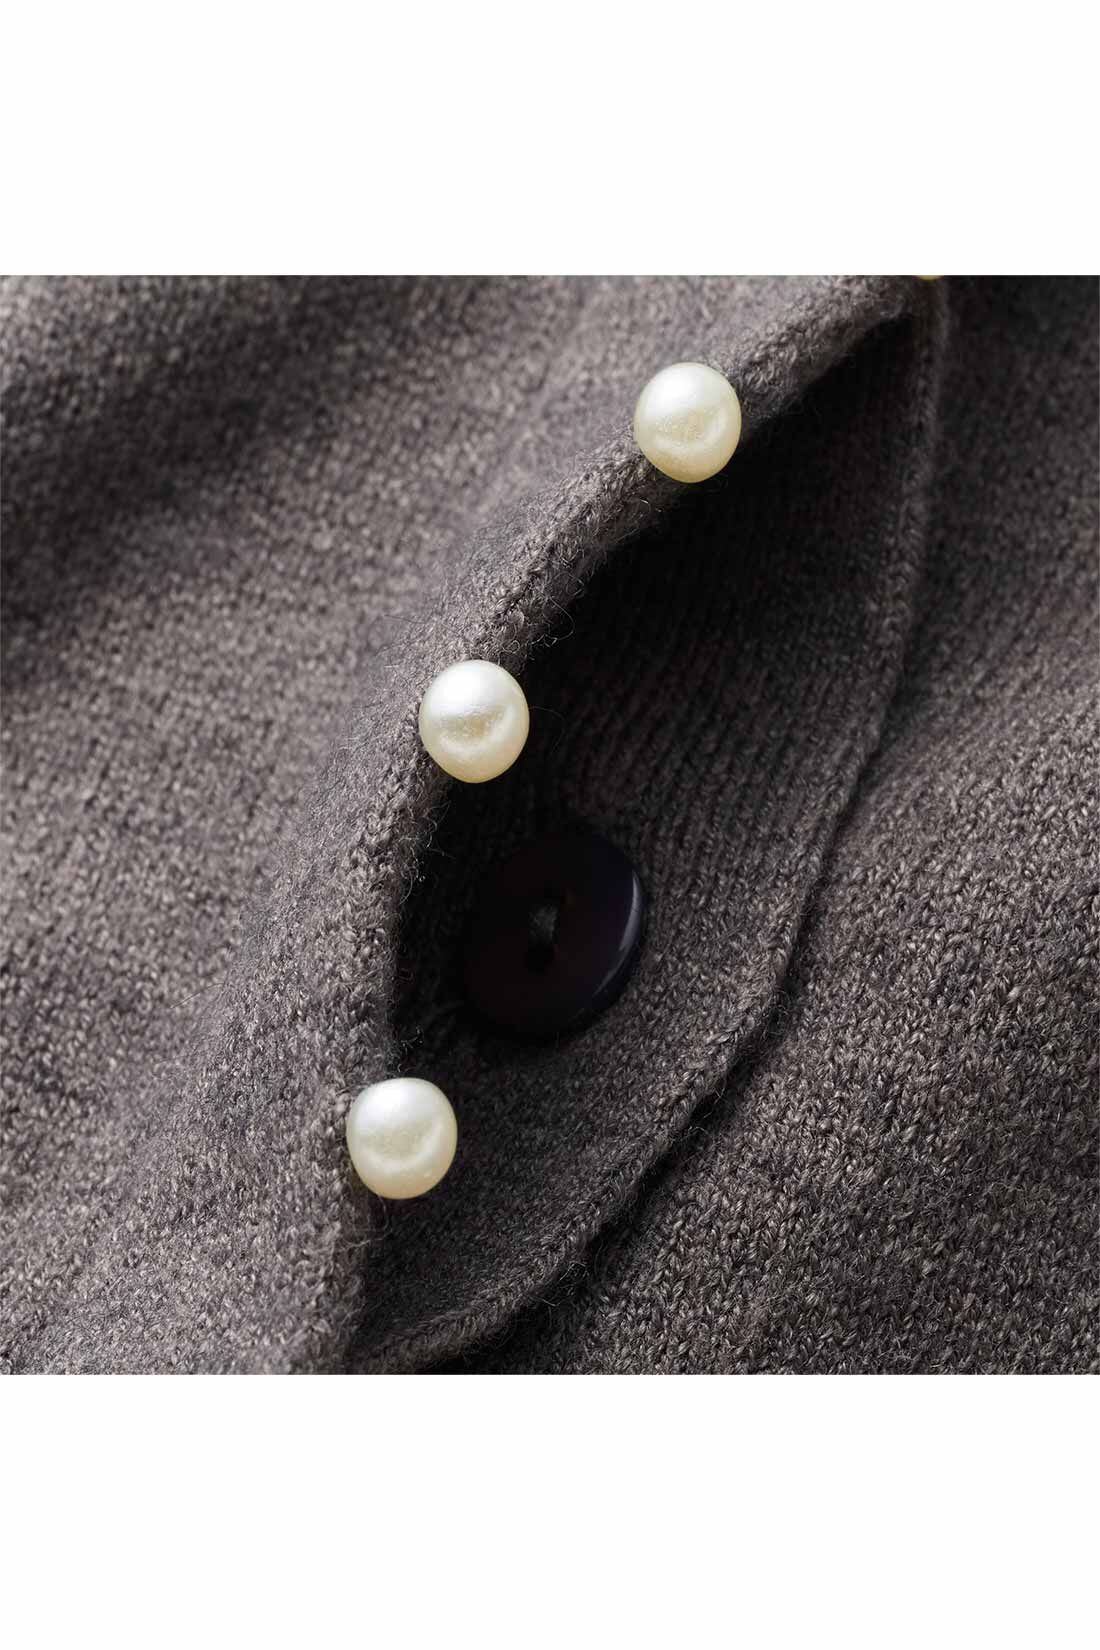 IEDIT|IEDIT[イディット]　アクセサリーみたいなミニパールが上品な 柄編み袖のカーディガン〈ボルドー〉|フロントボタンを隠した比翼仕立て。パールの飾りが引き立つデザインに。